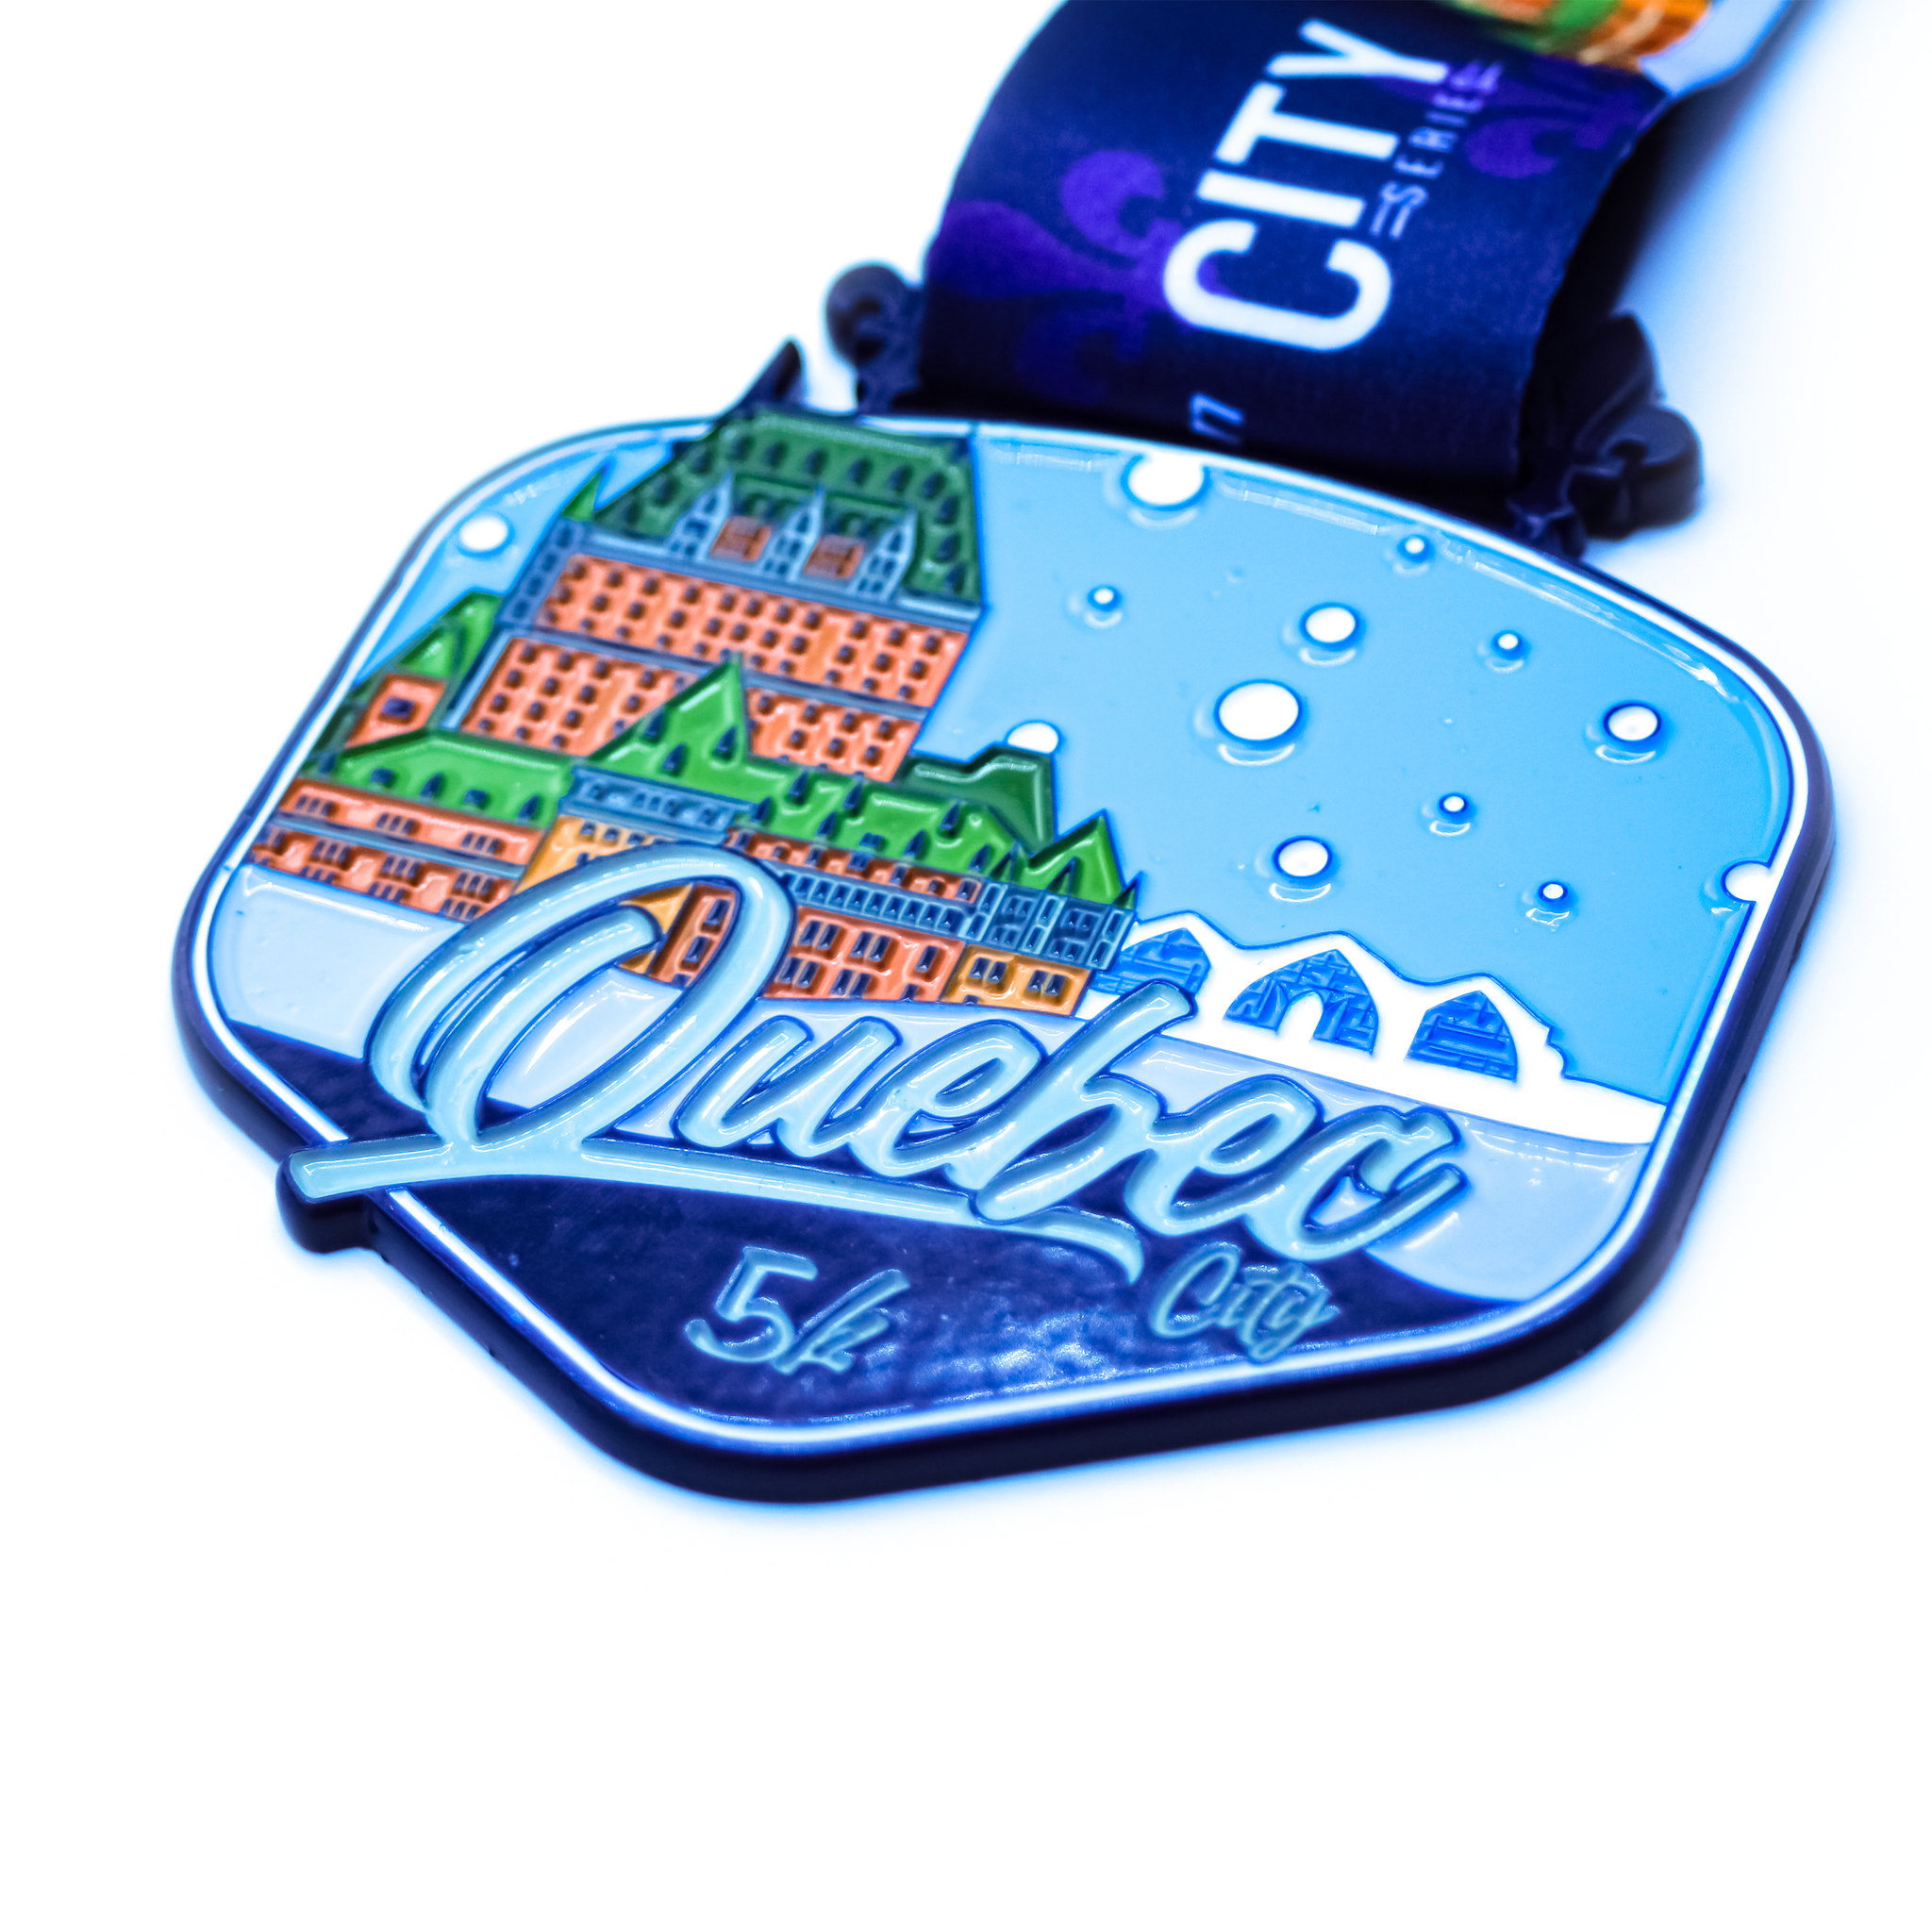 City Series: Quebec City 5k - Entry + Medal